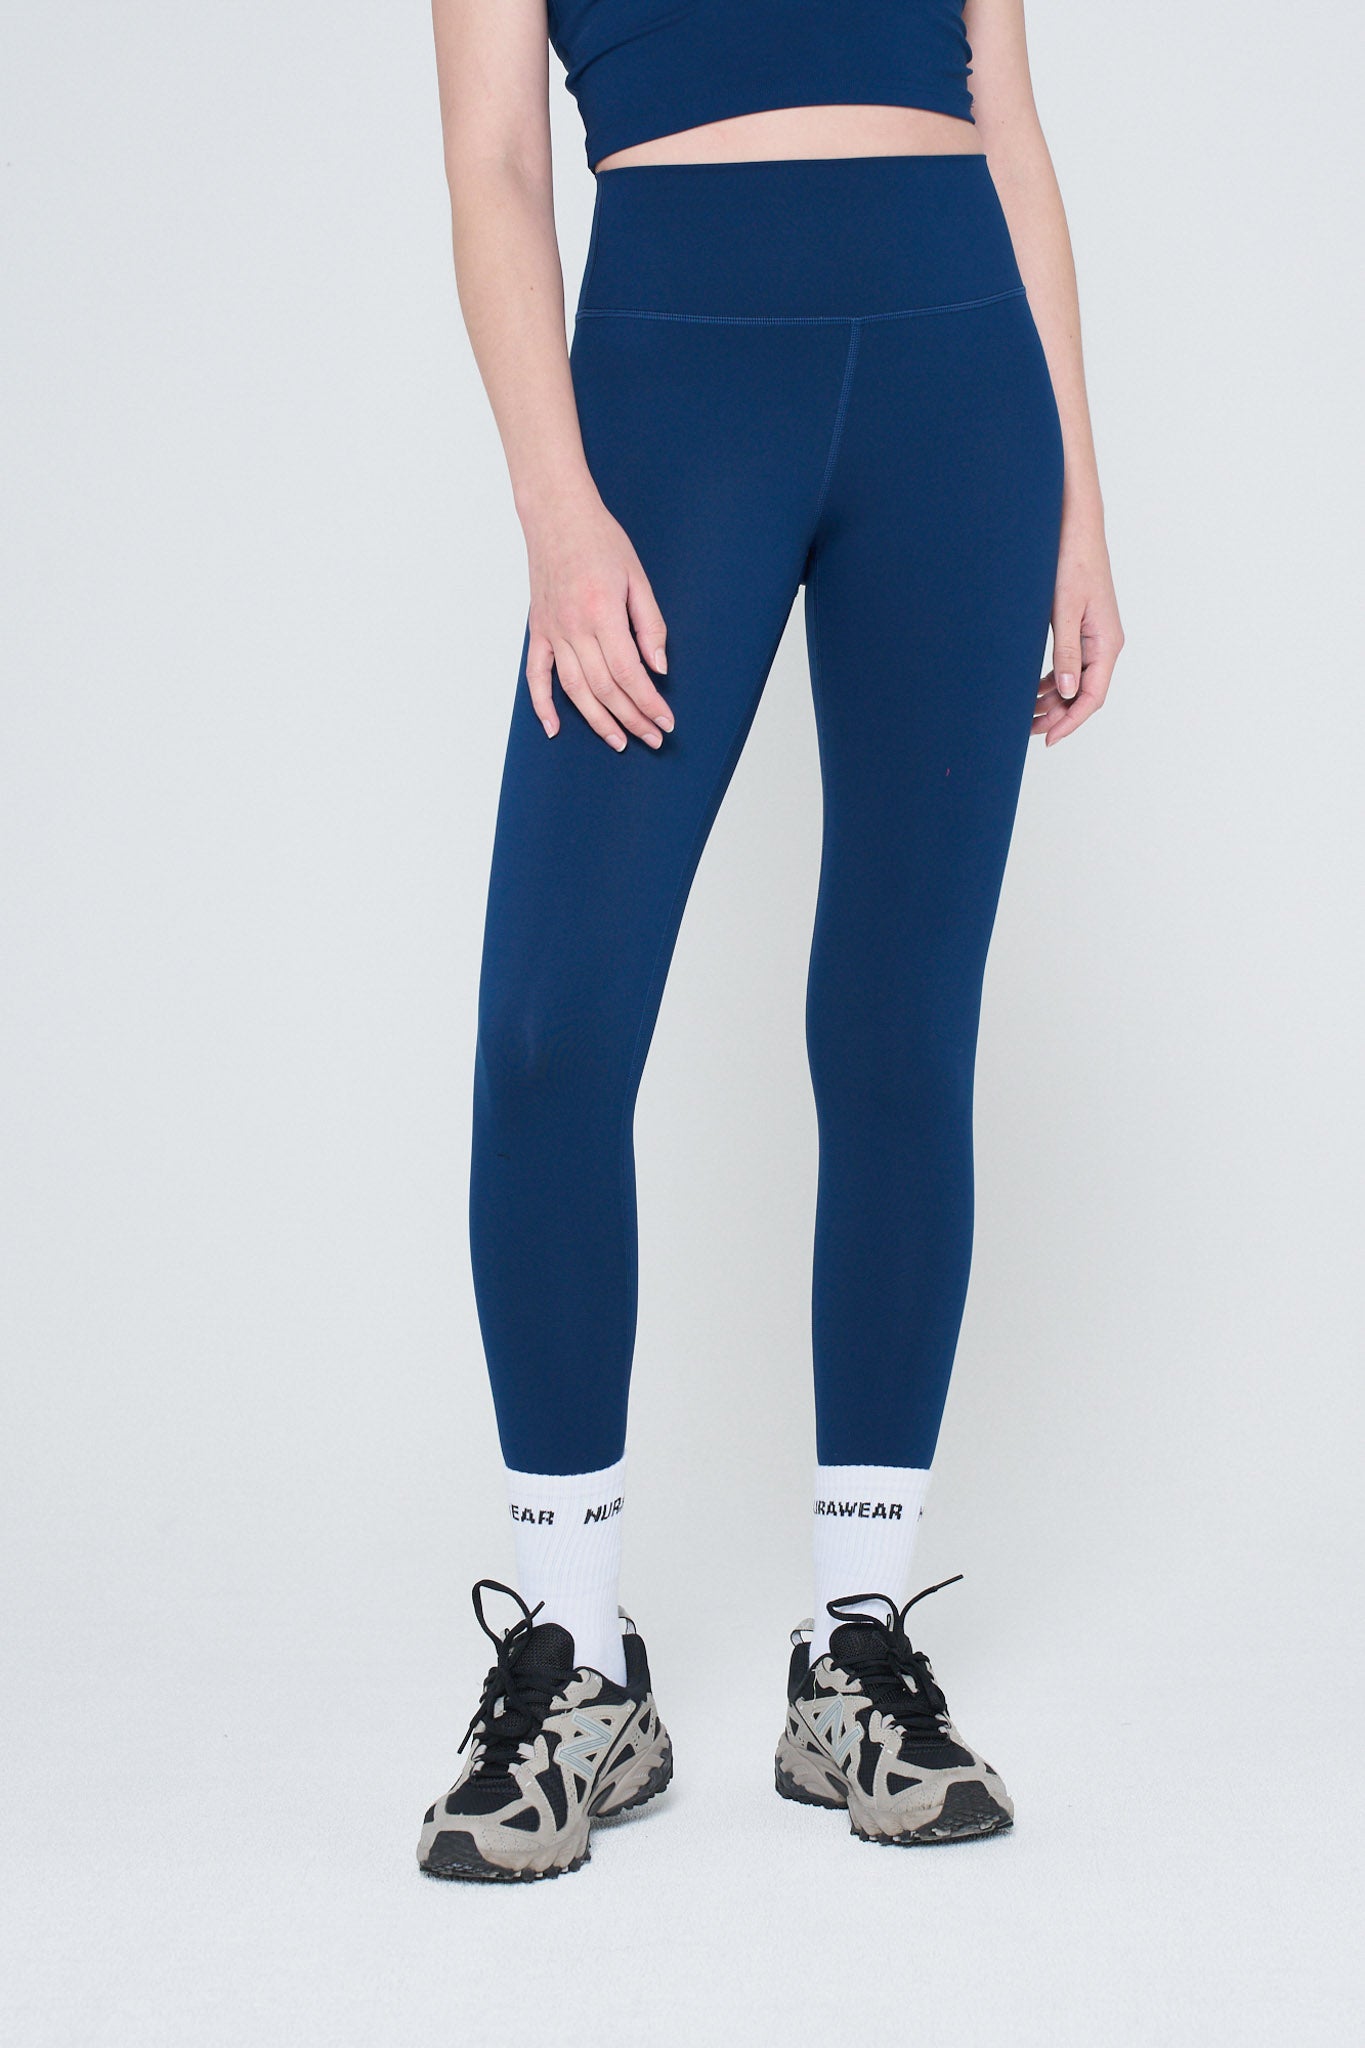 MYO2 Navy Blue Fabric Stretchable Sportswear Leggings for Women Get Extra  Breathable Premium Leggings